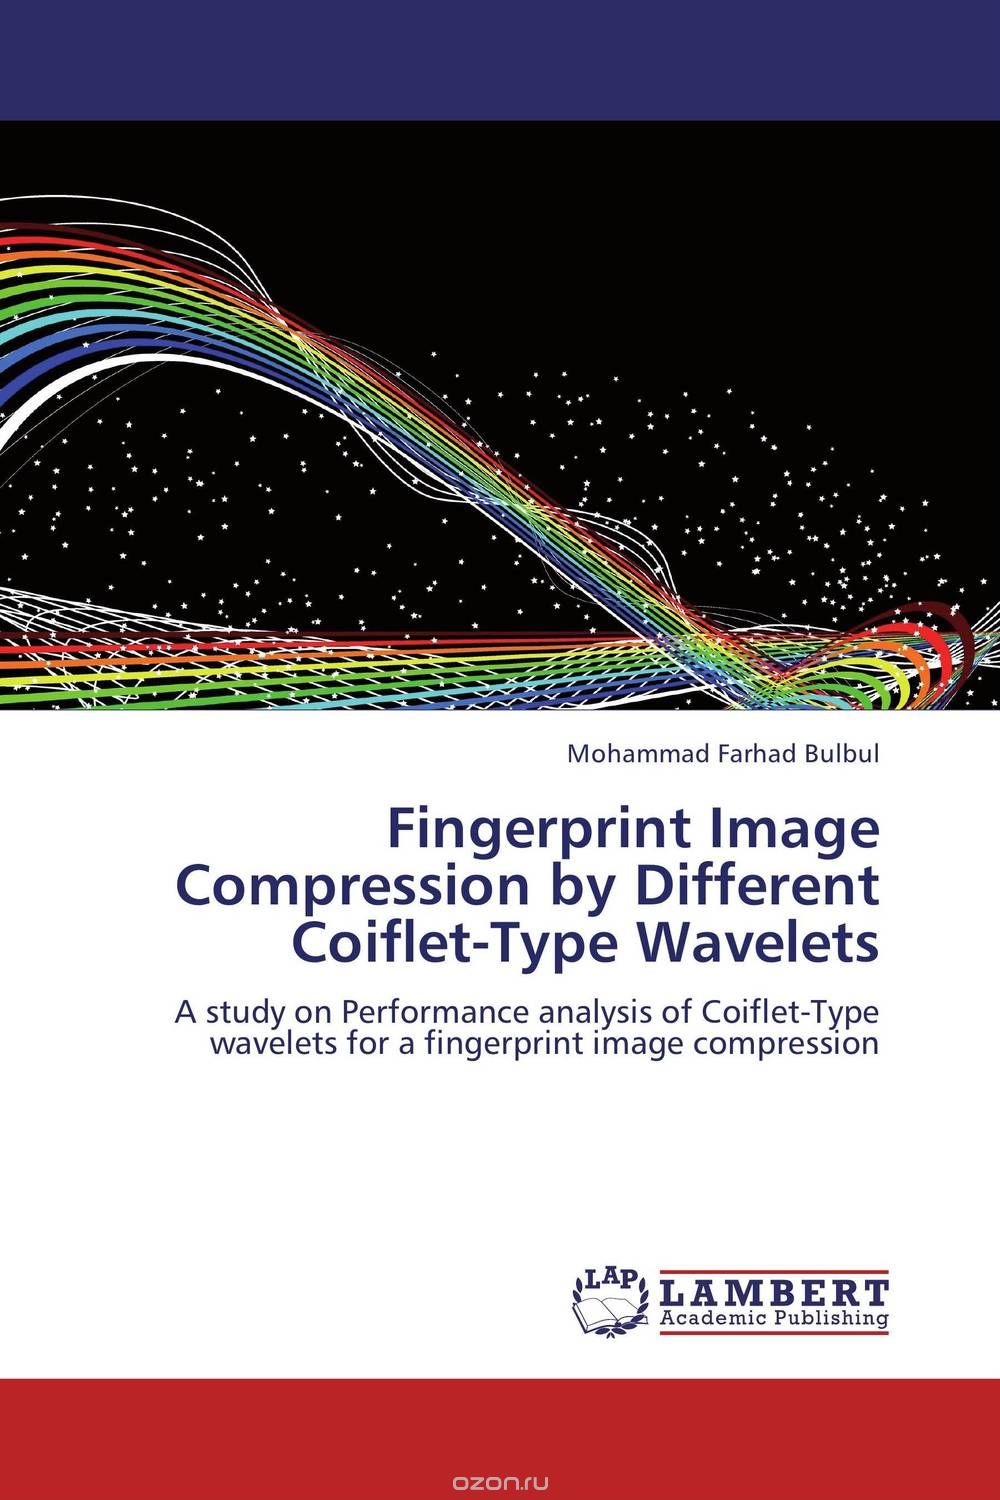 Скачать книгу "Fingerprint Image Compression by Different Coiflet-Type Wavelets"